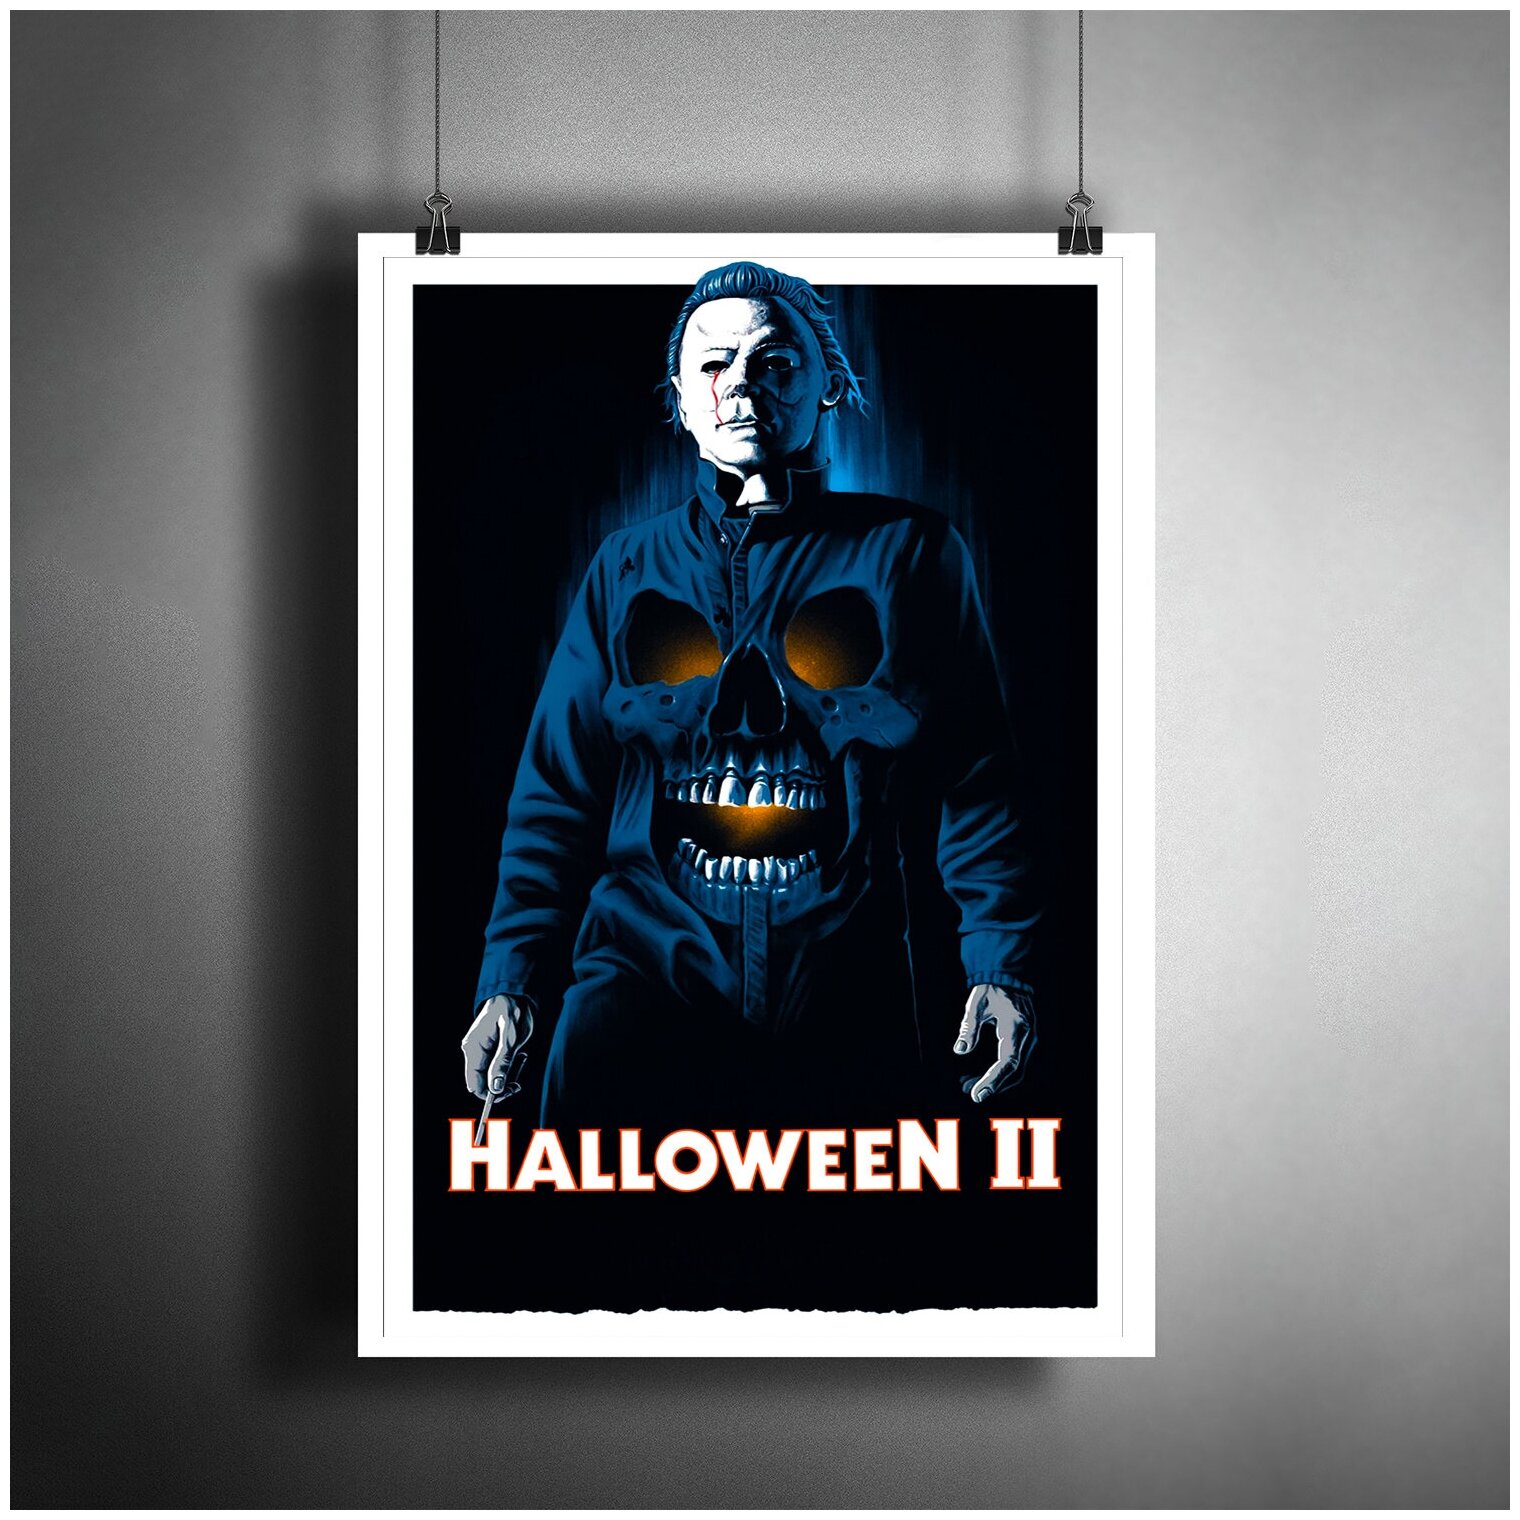 Постер плакат для интерьера "Фильм: Хэллоуин 2. Майкл Майерс. Halloween II"/ Декор дома, офиса, комнаты A3 (297 x 420 мм)